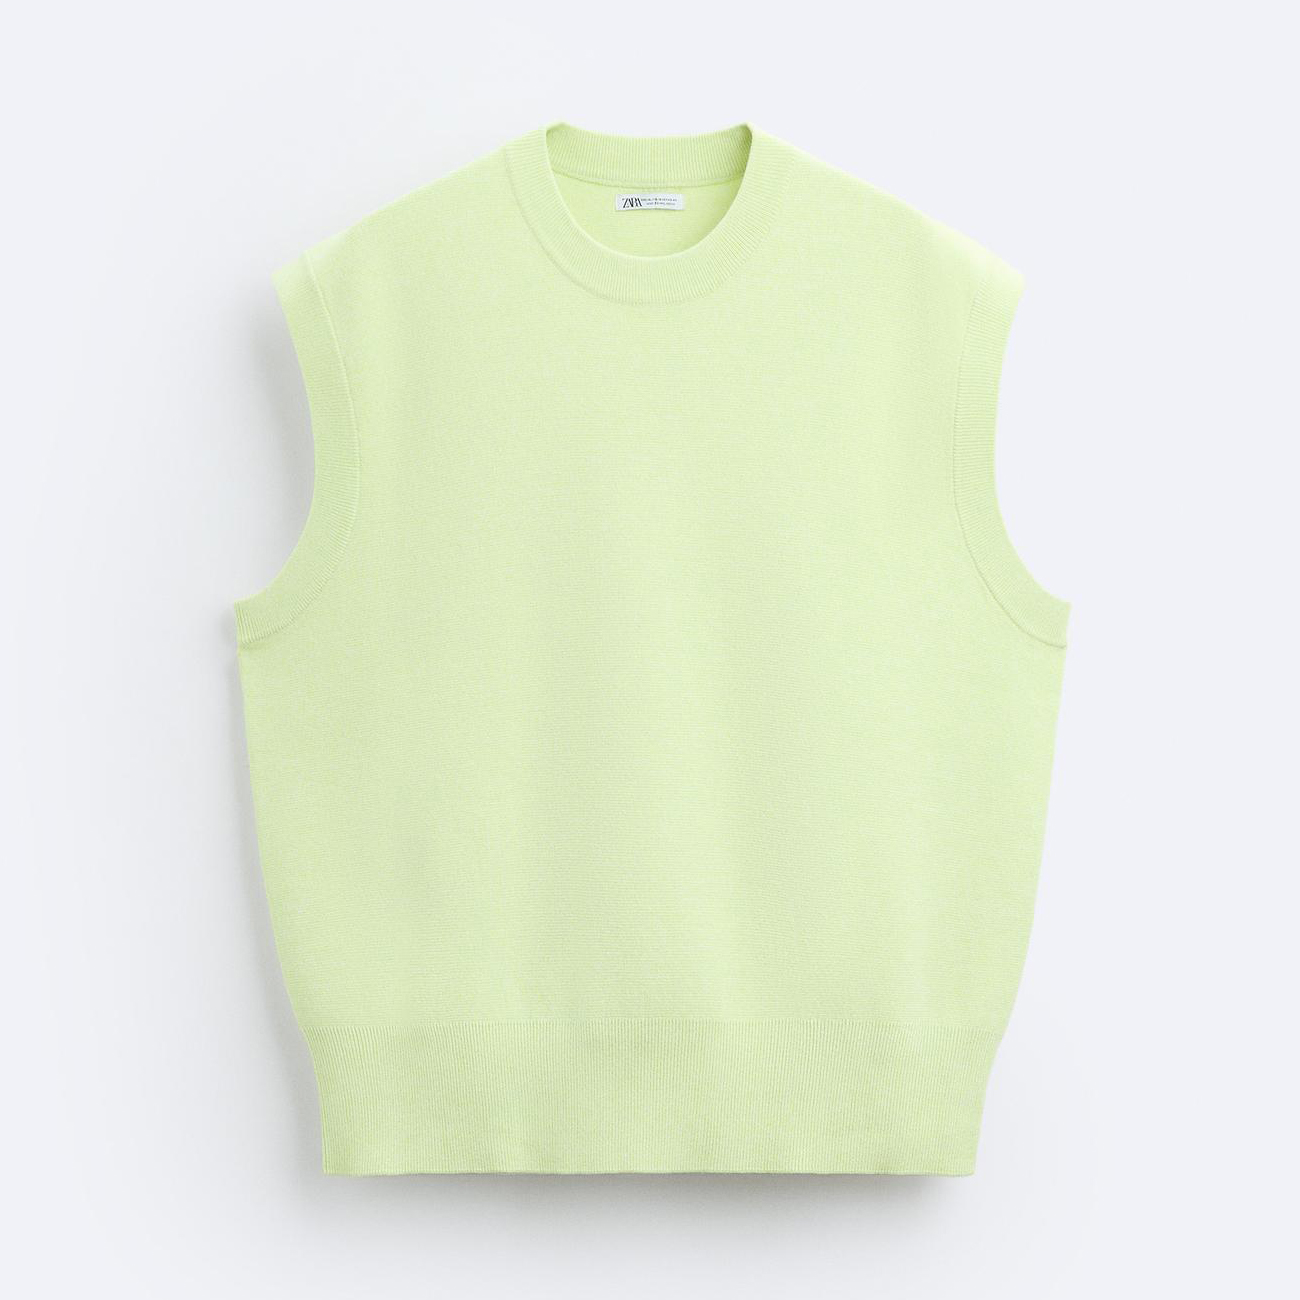 Жилет Zara Knit Cotton, светло-зеленый жилет zara knit cotton светло зеленый